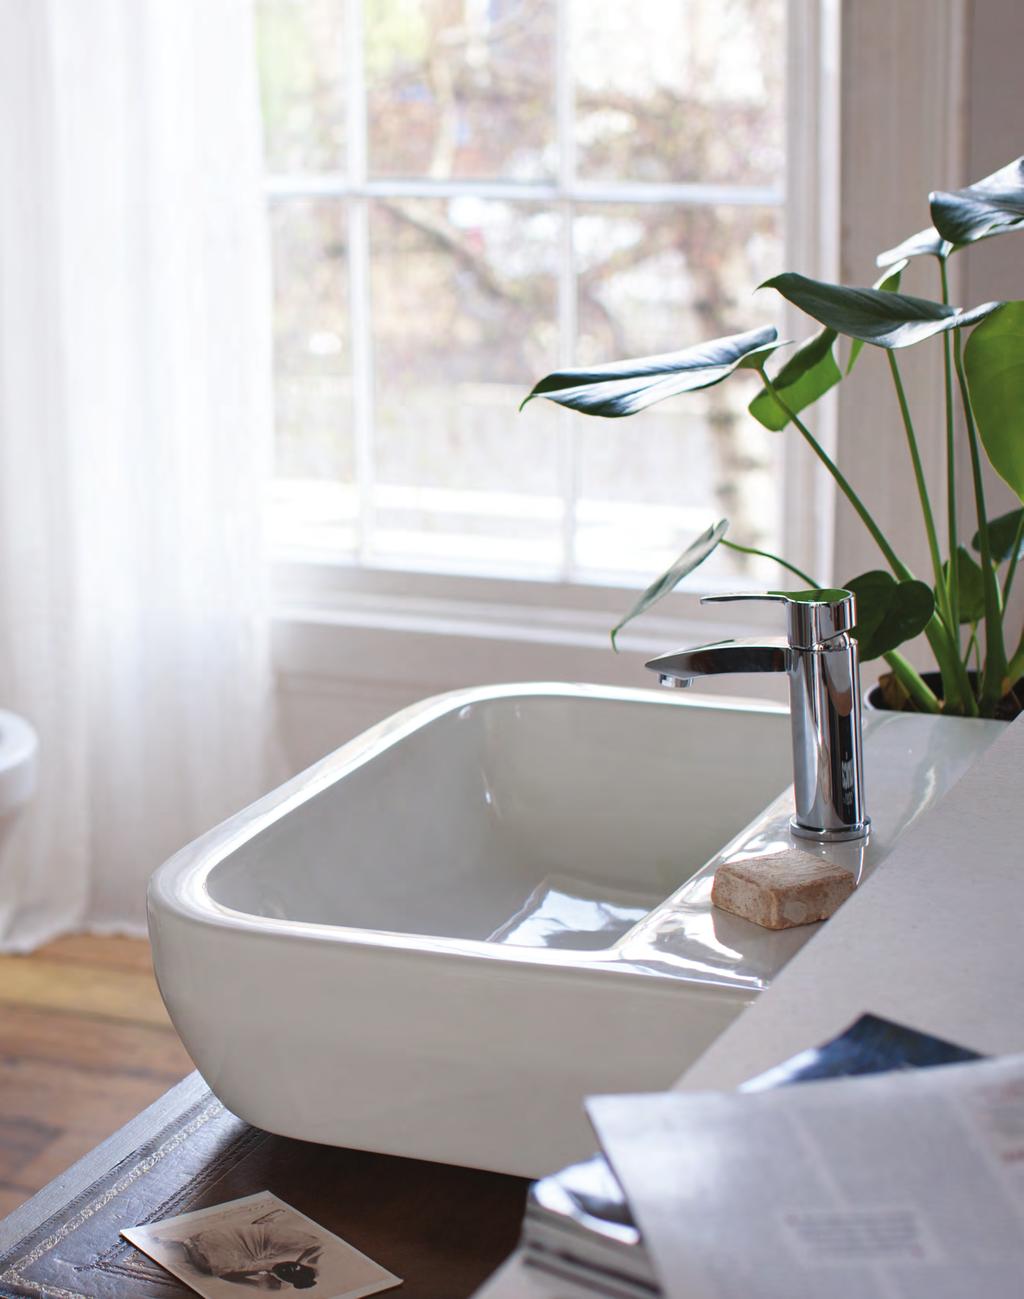 vanity work-top basins, maximising space and